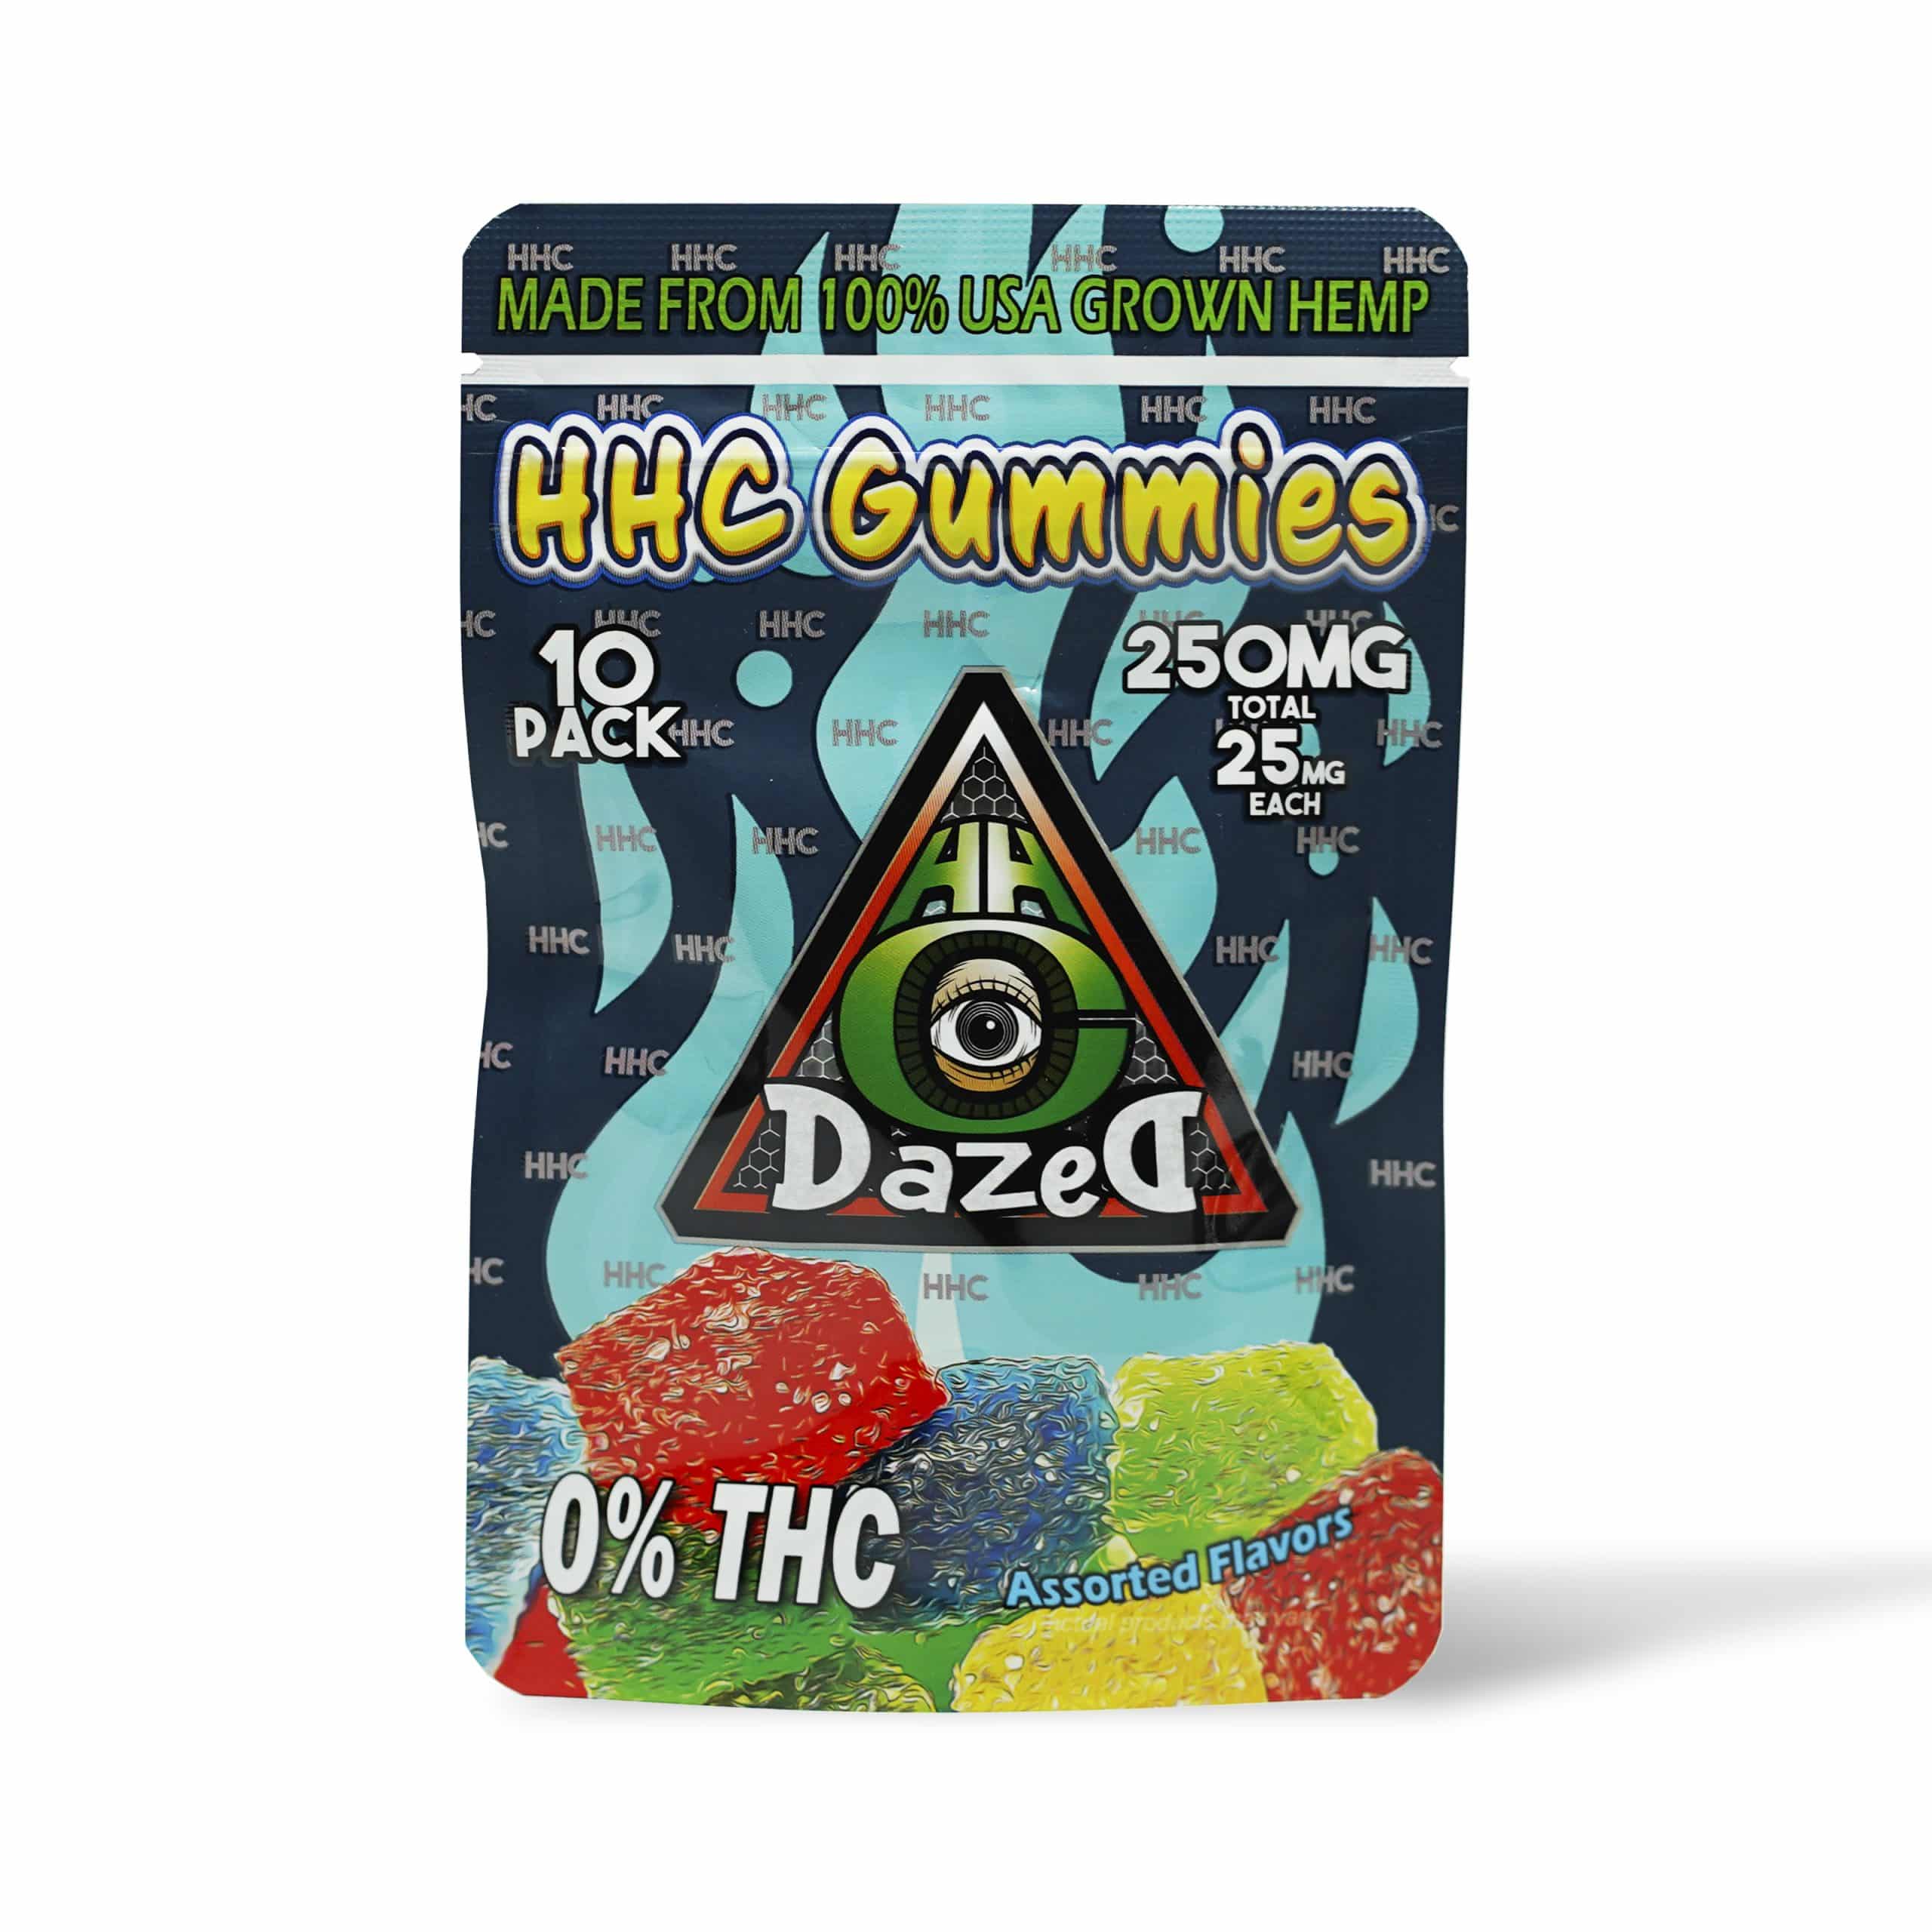 DazeD8 HHC Gummies – 10pc (25mg) Best Price